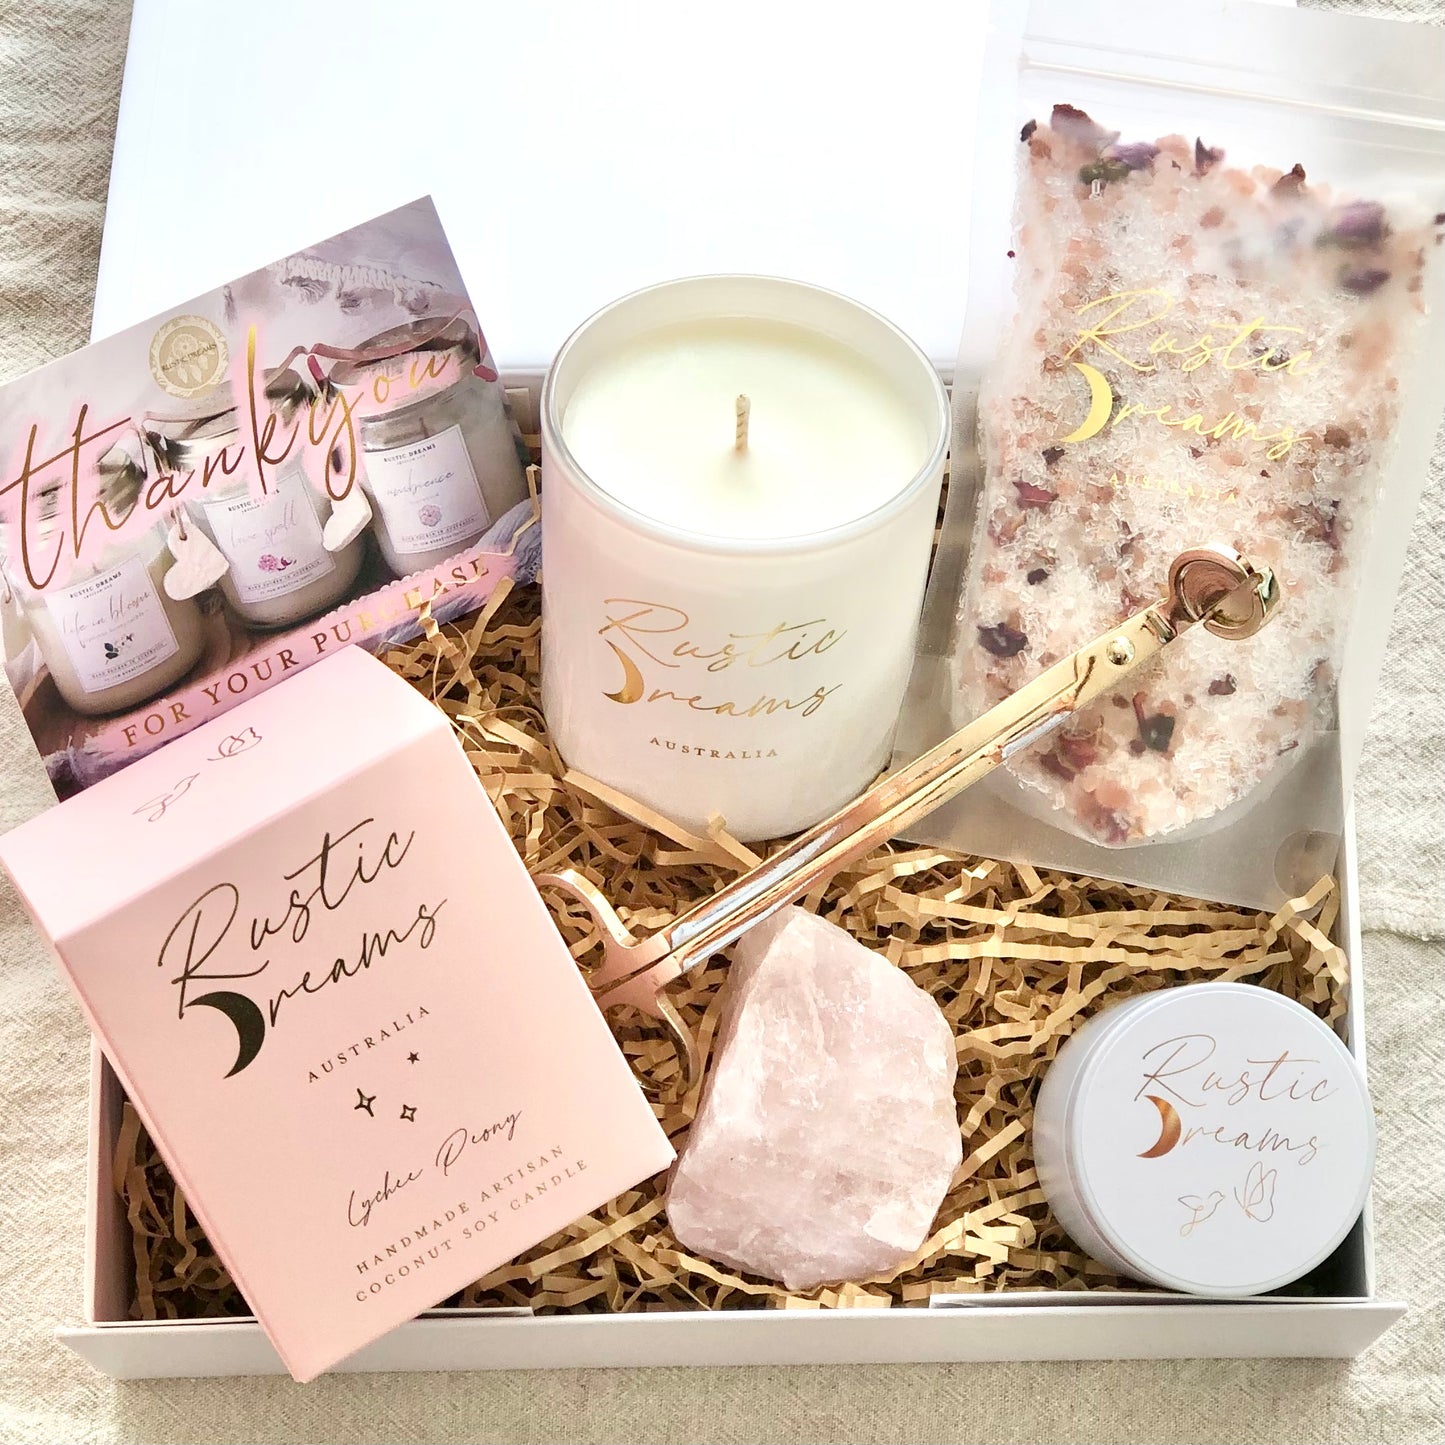 Rustic Dreams Gift Box - Soy Candle - Wick Trimmer - Rose Quartz crystal - Bath Salts